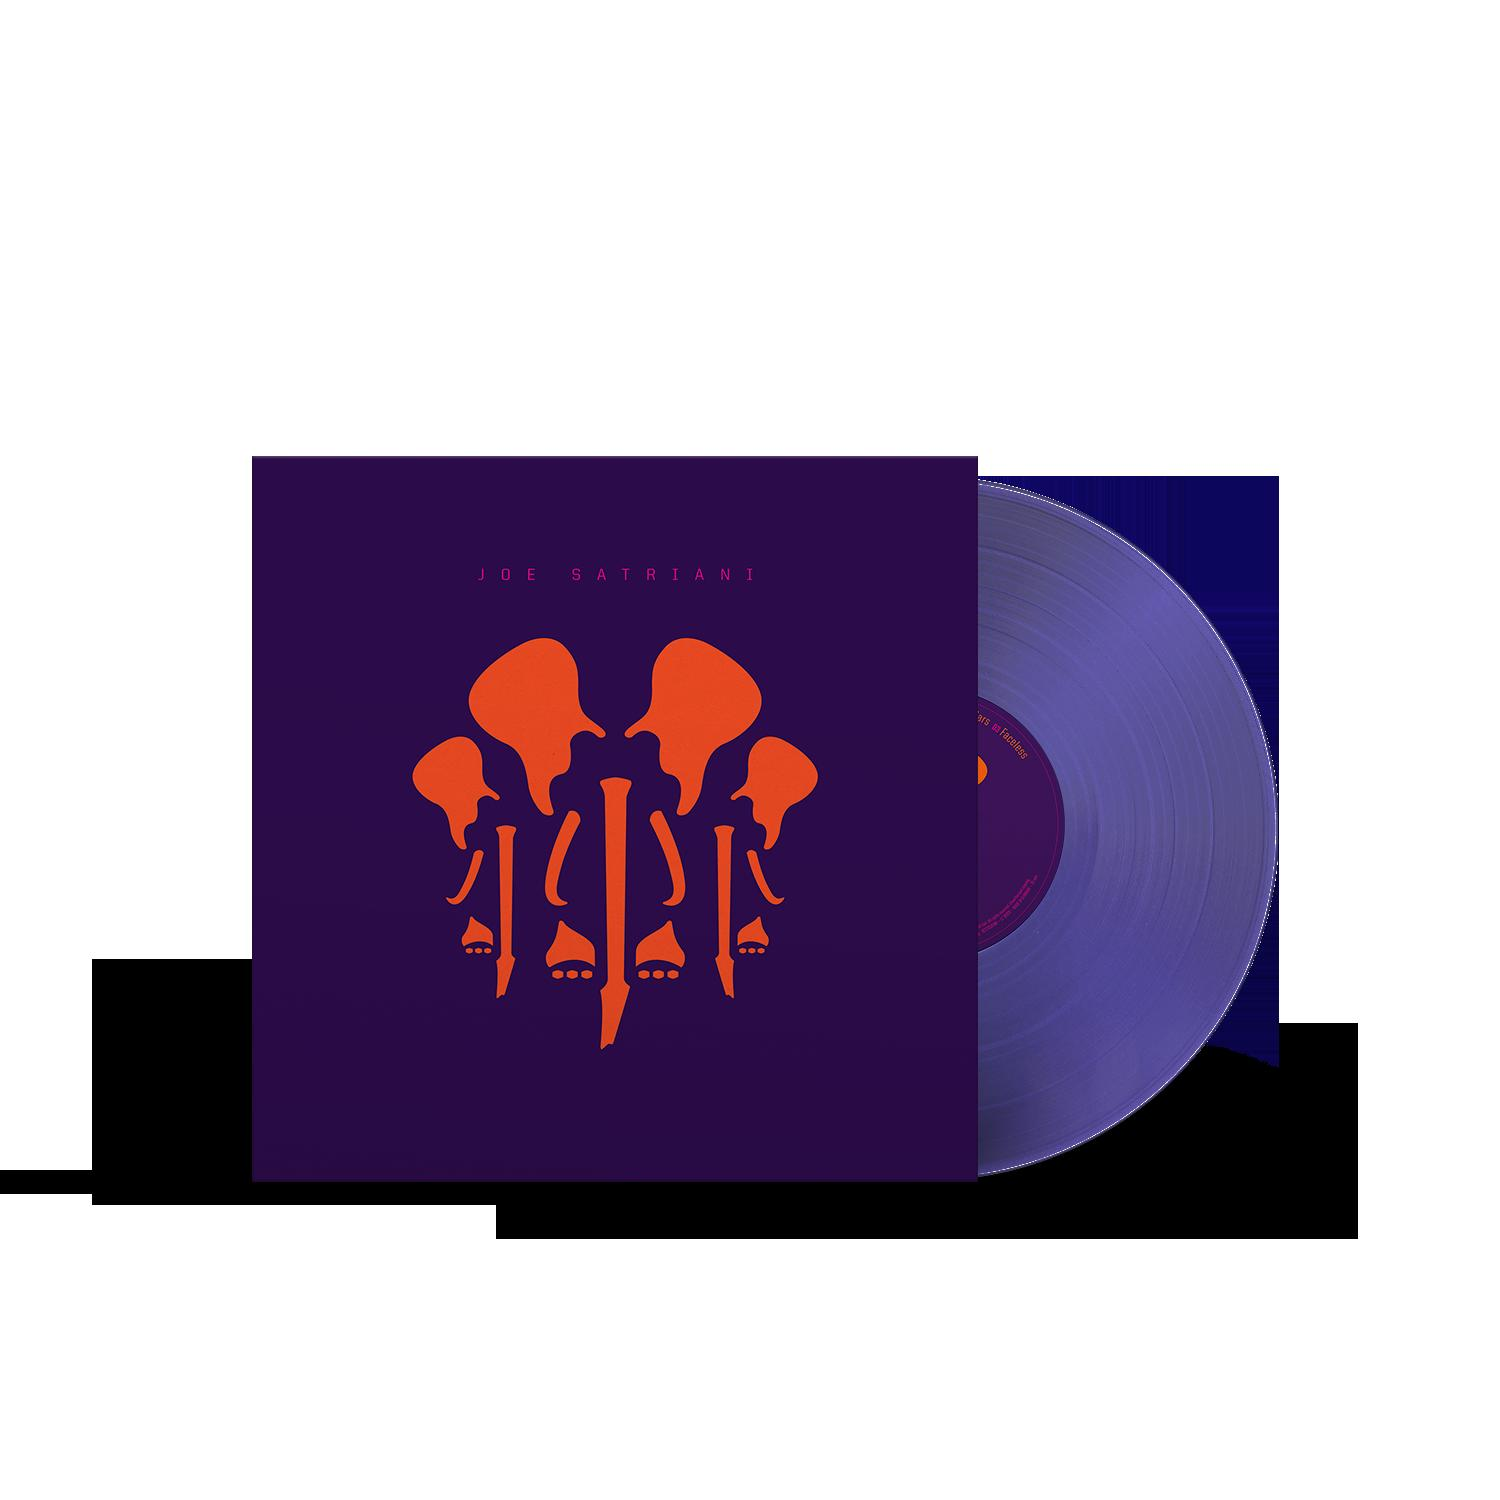 (Vinyl) - Elephants (Ltd/180g/Gatefold/Purple) Mars The Joe Satriani - Of